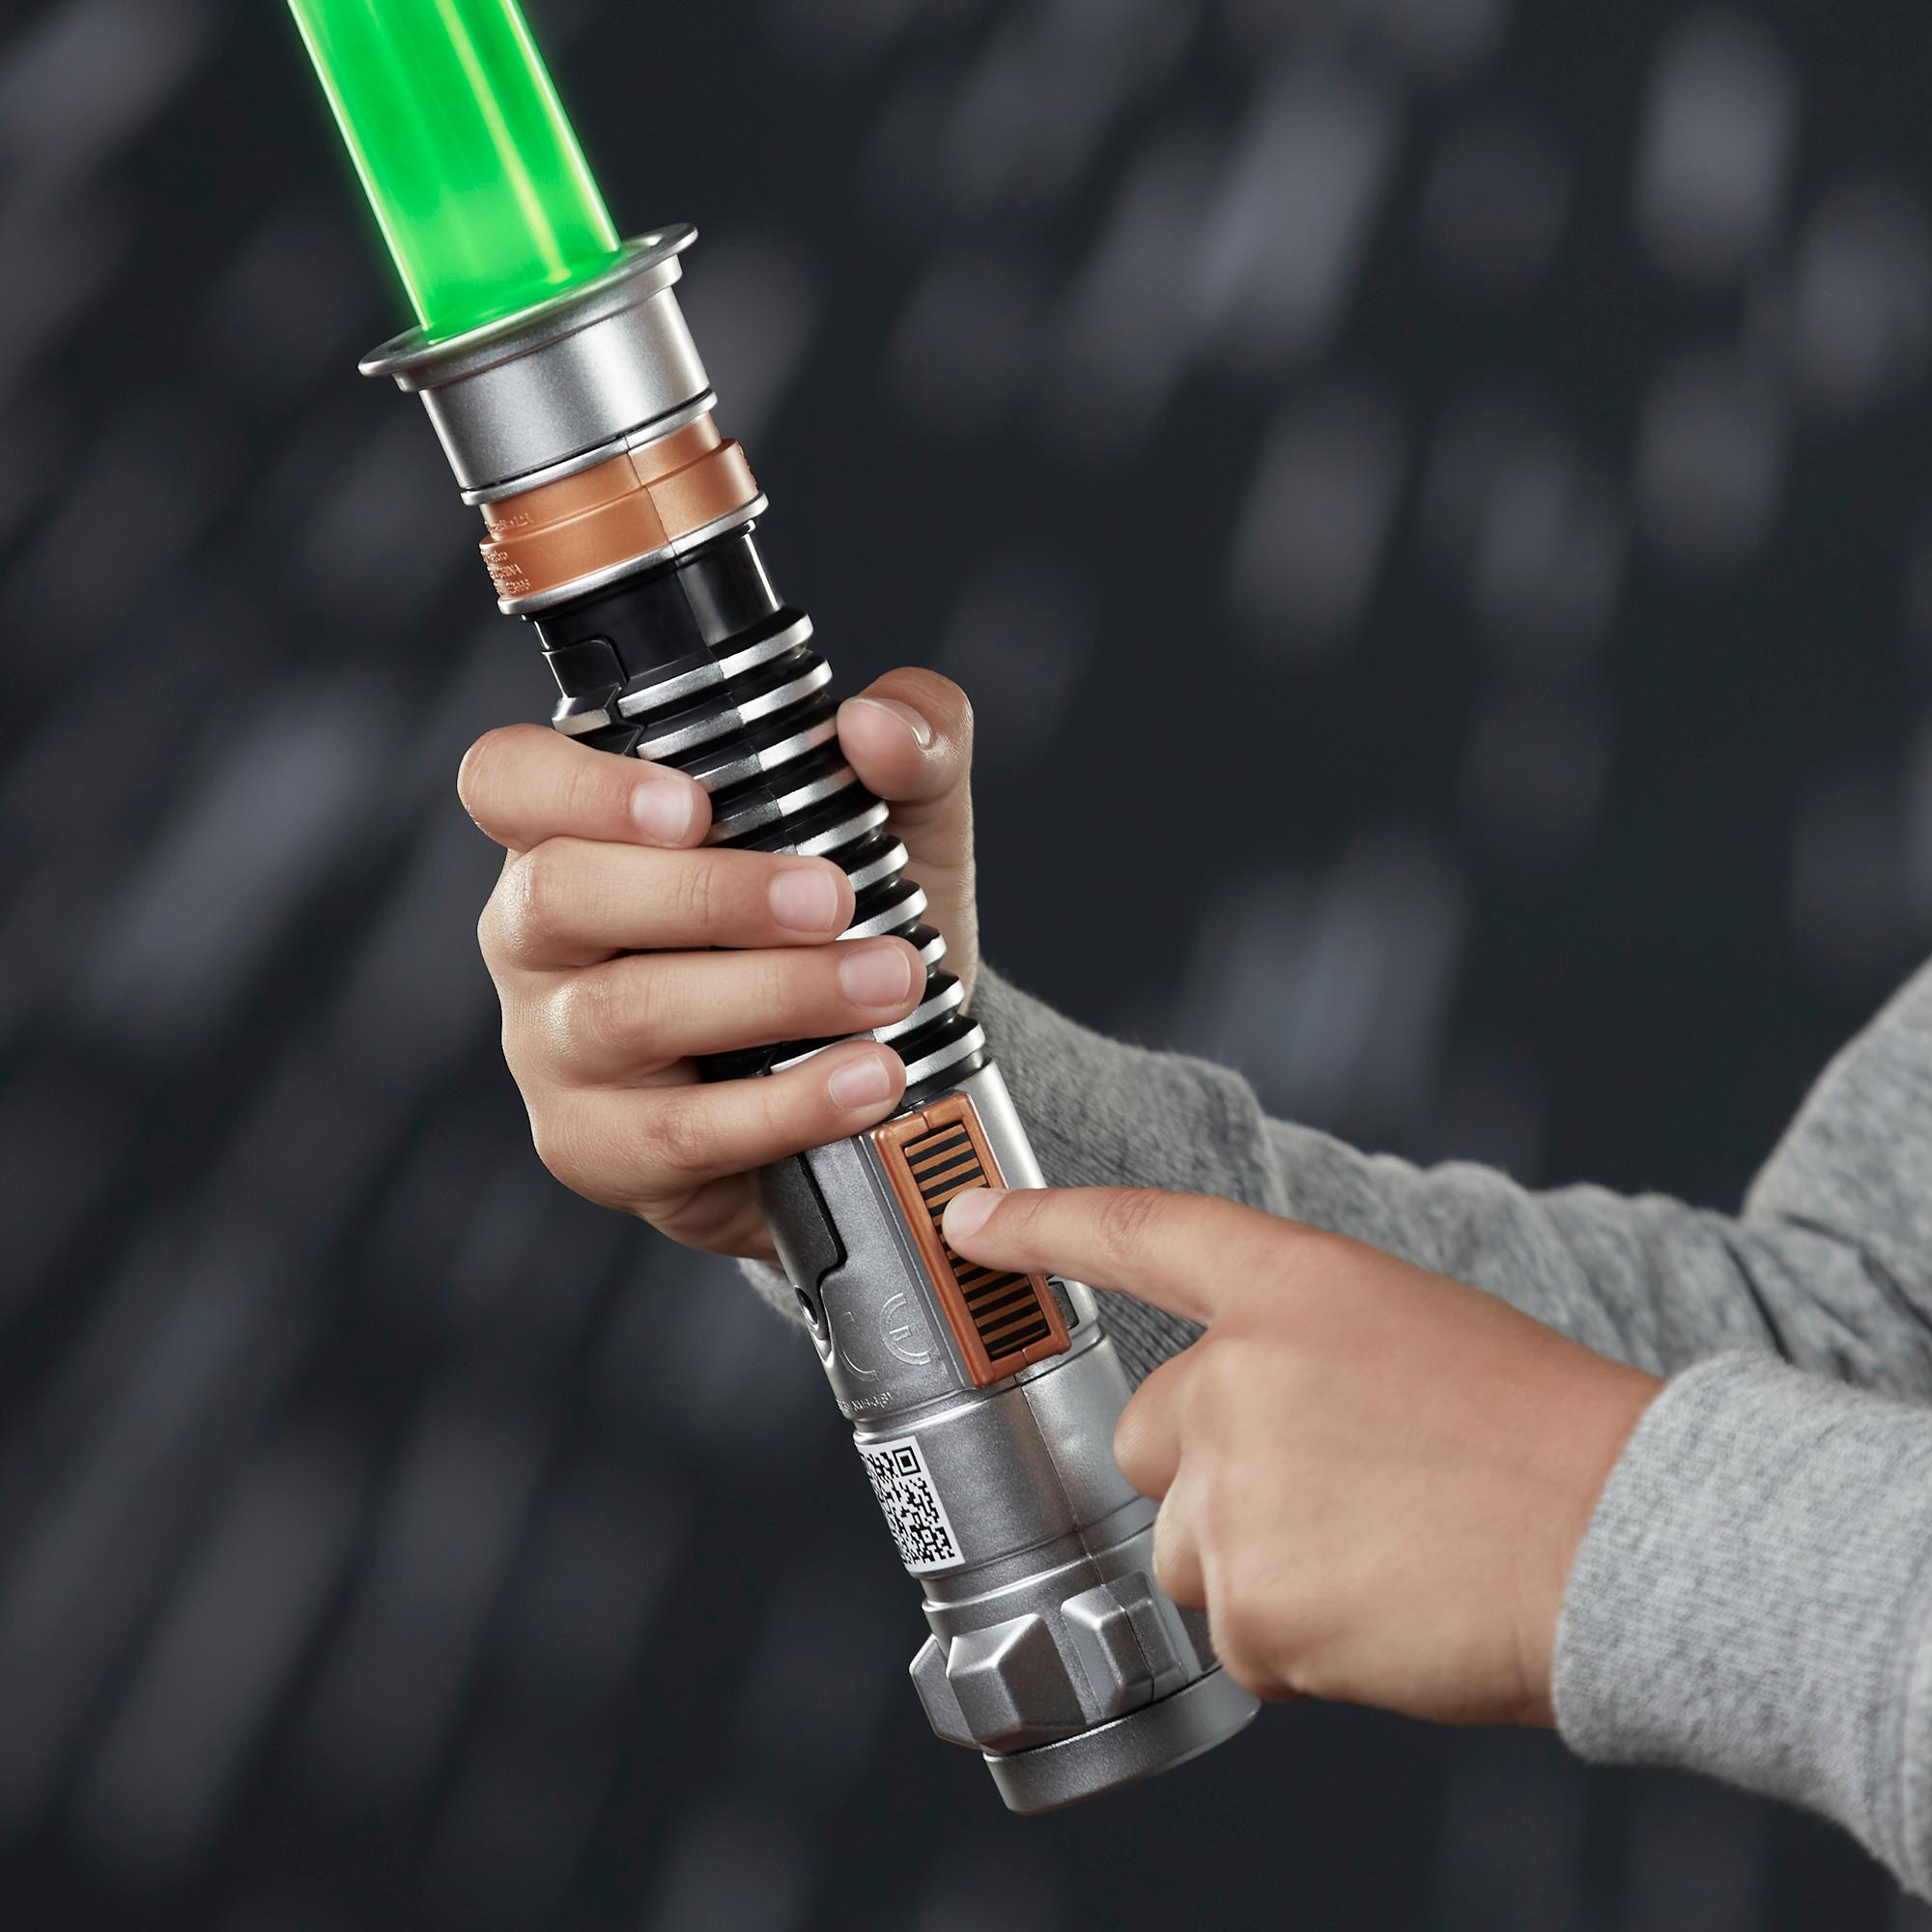 Star Wars Return of the Jedi Luke Skywalker Electronic Lightsaber 